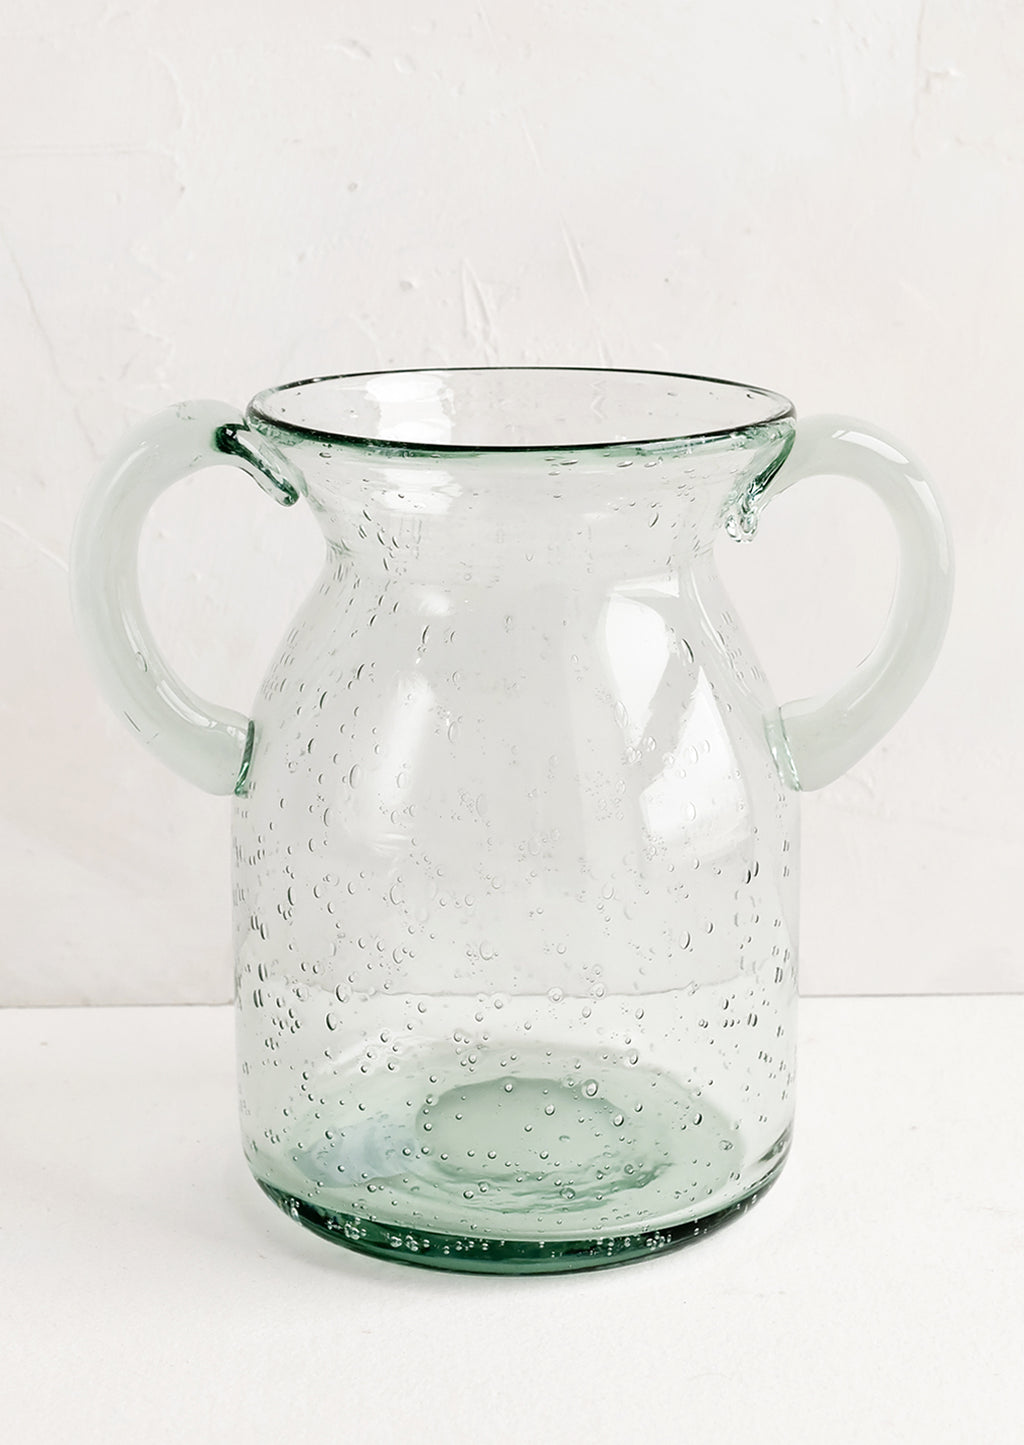 2: A clear, jug-shaped glass vase.